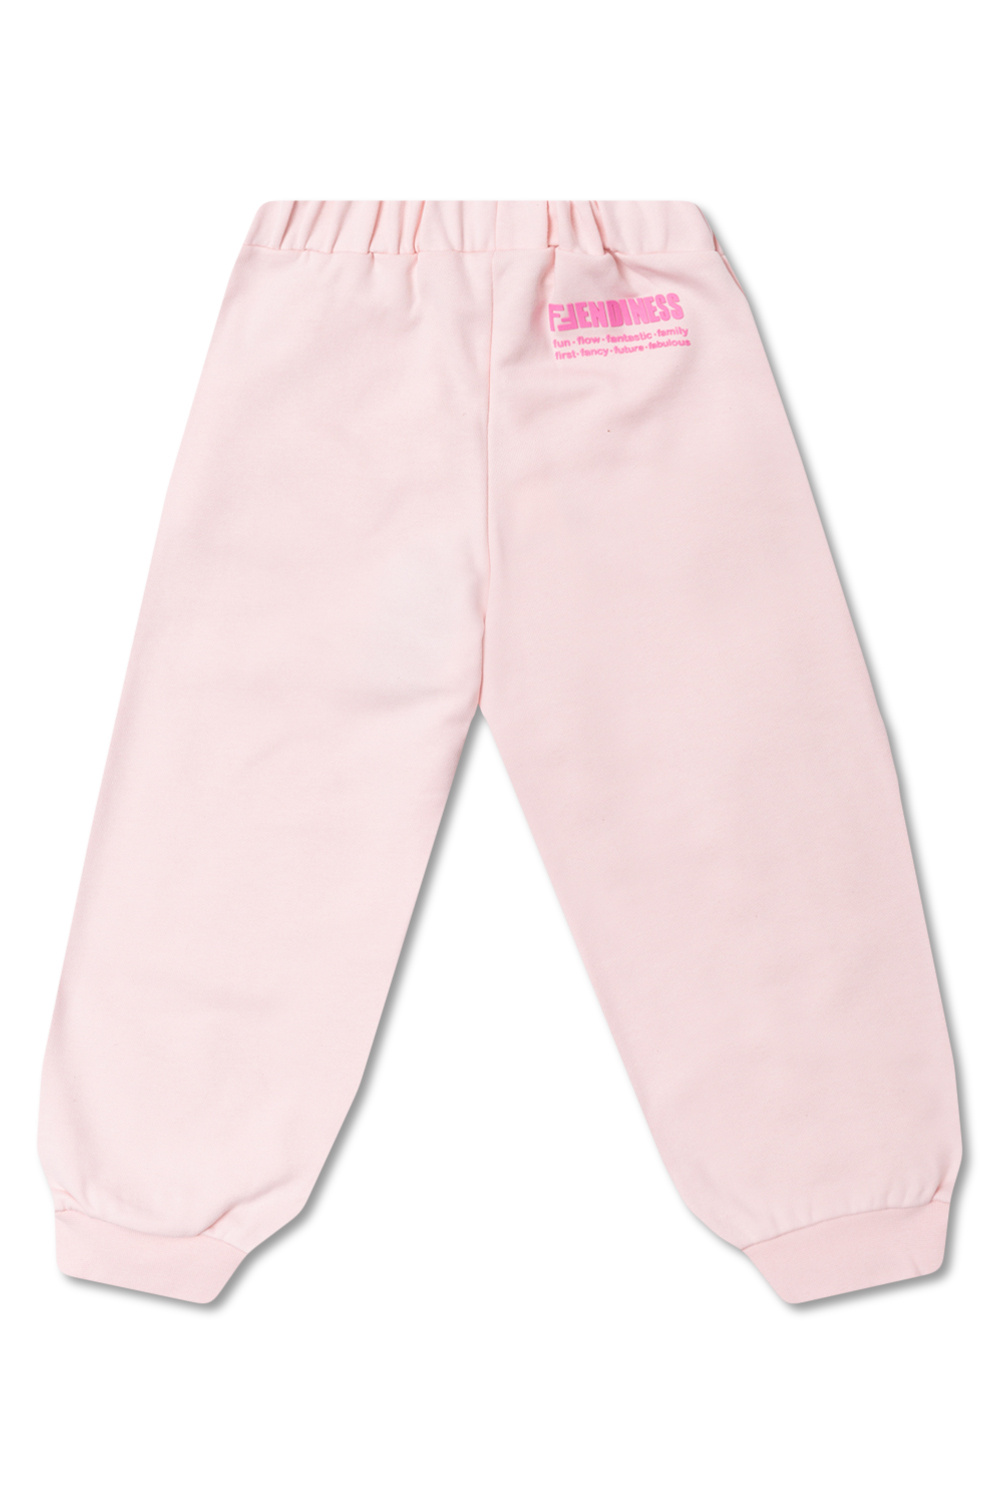 Fendi Kids Fendi Lurex Sock High-Top pink